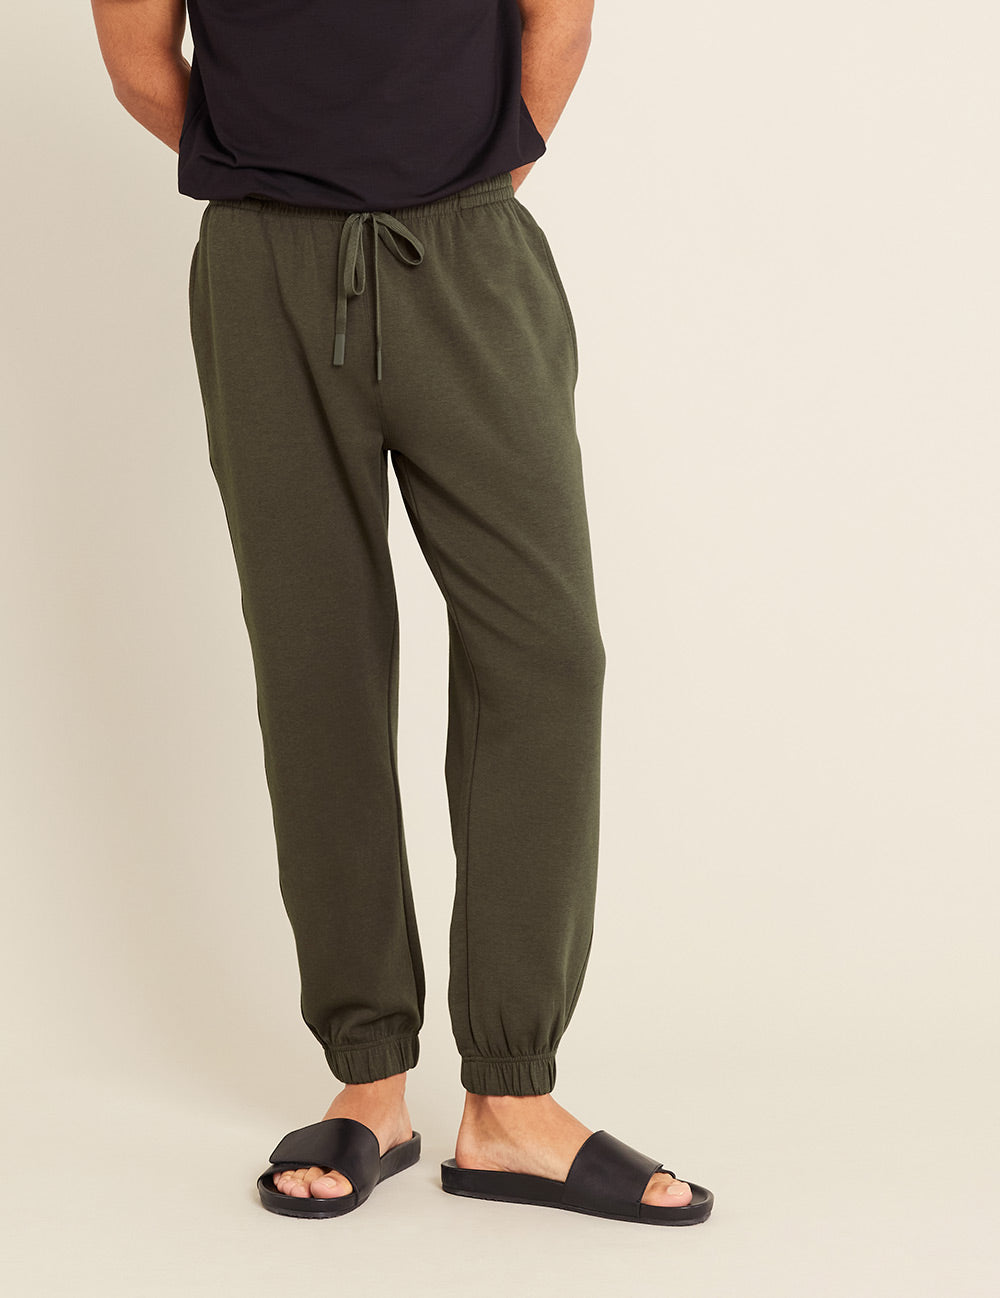 Gender-Neutral-Cuffed-Sweat-Pants-Dark-Olive-Male-Front.jpg